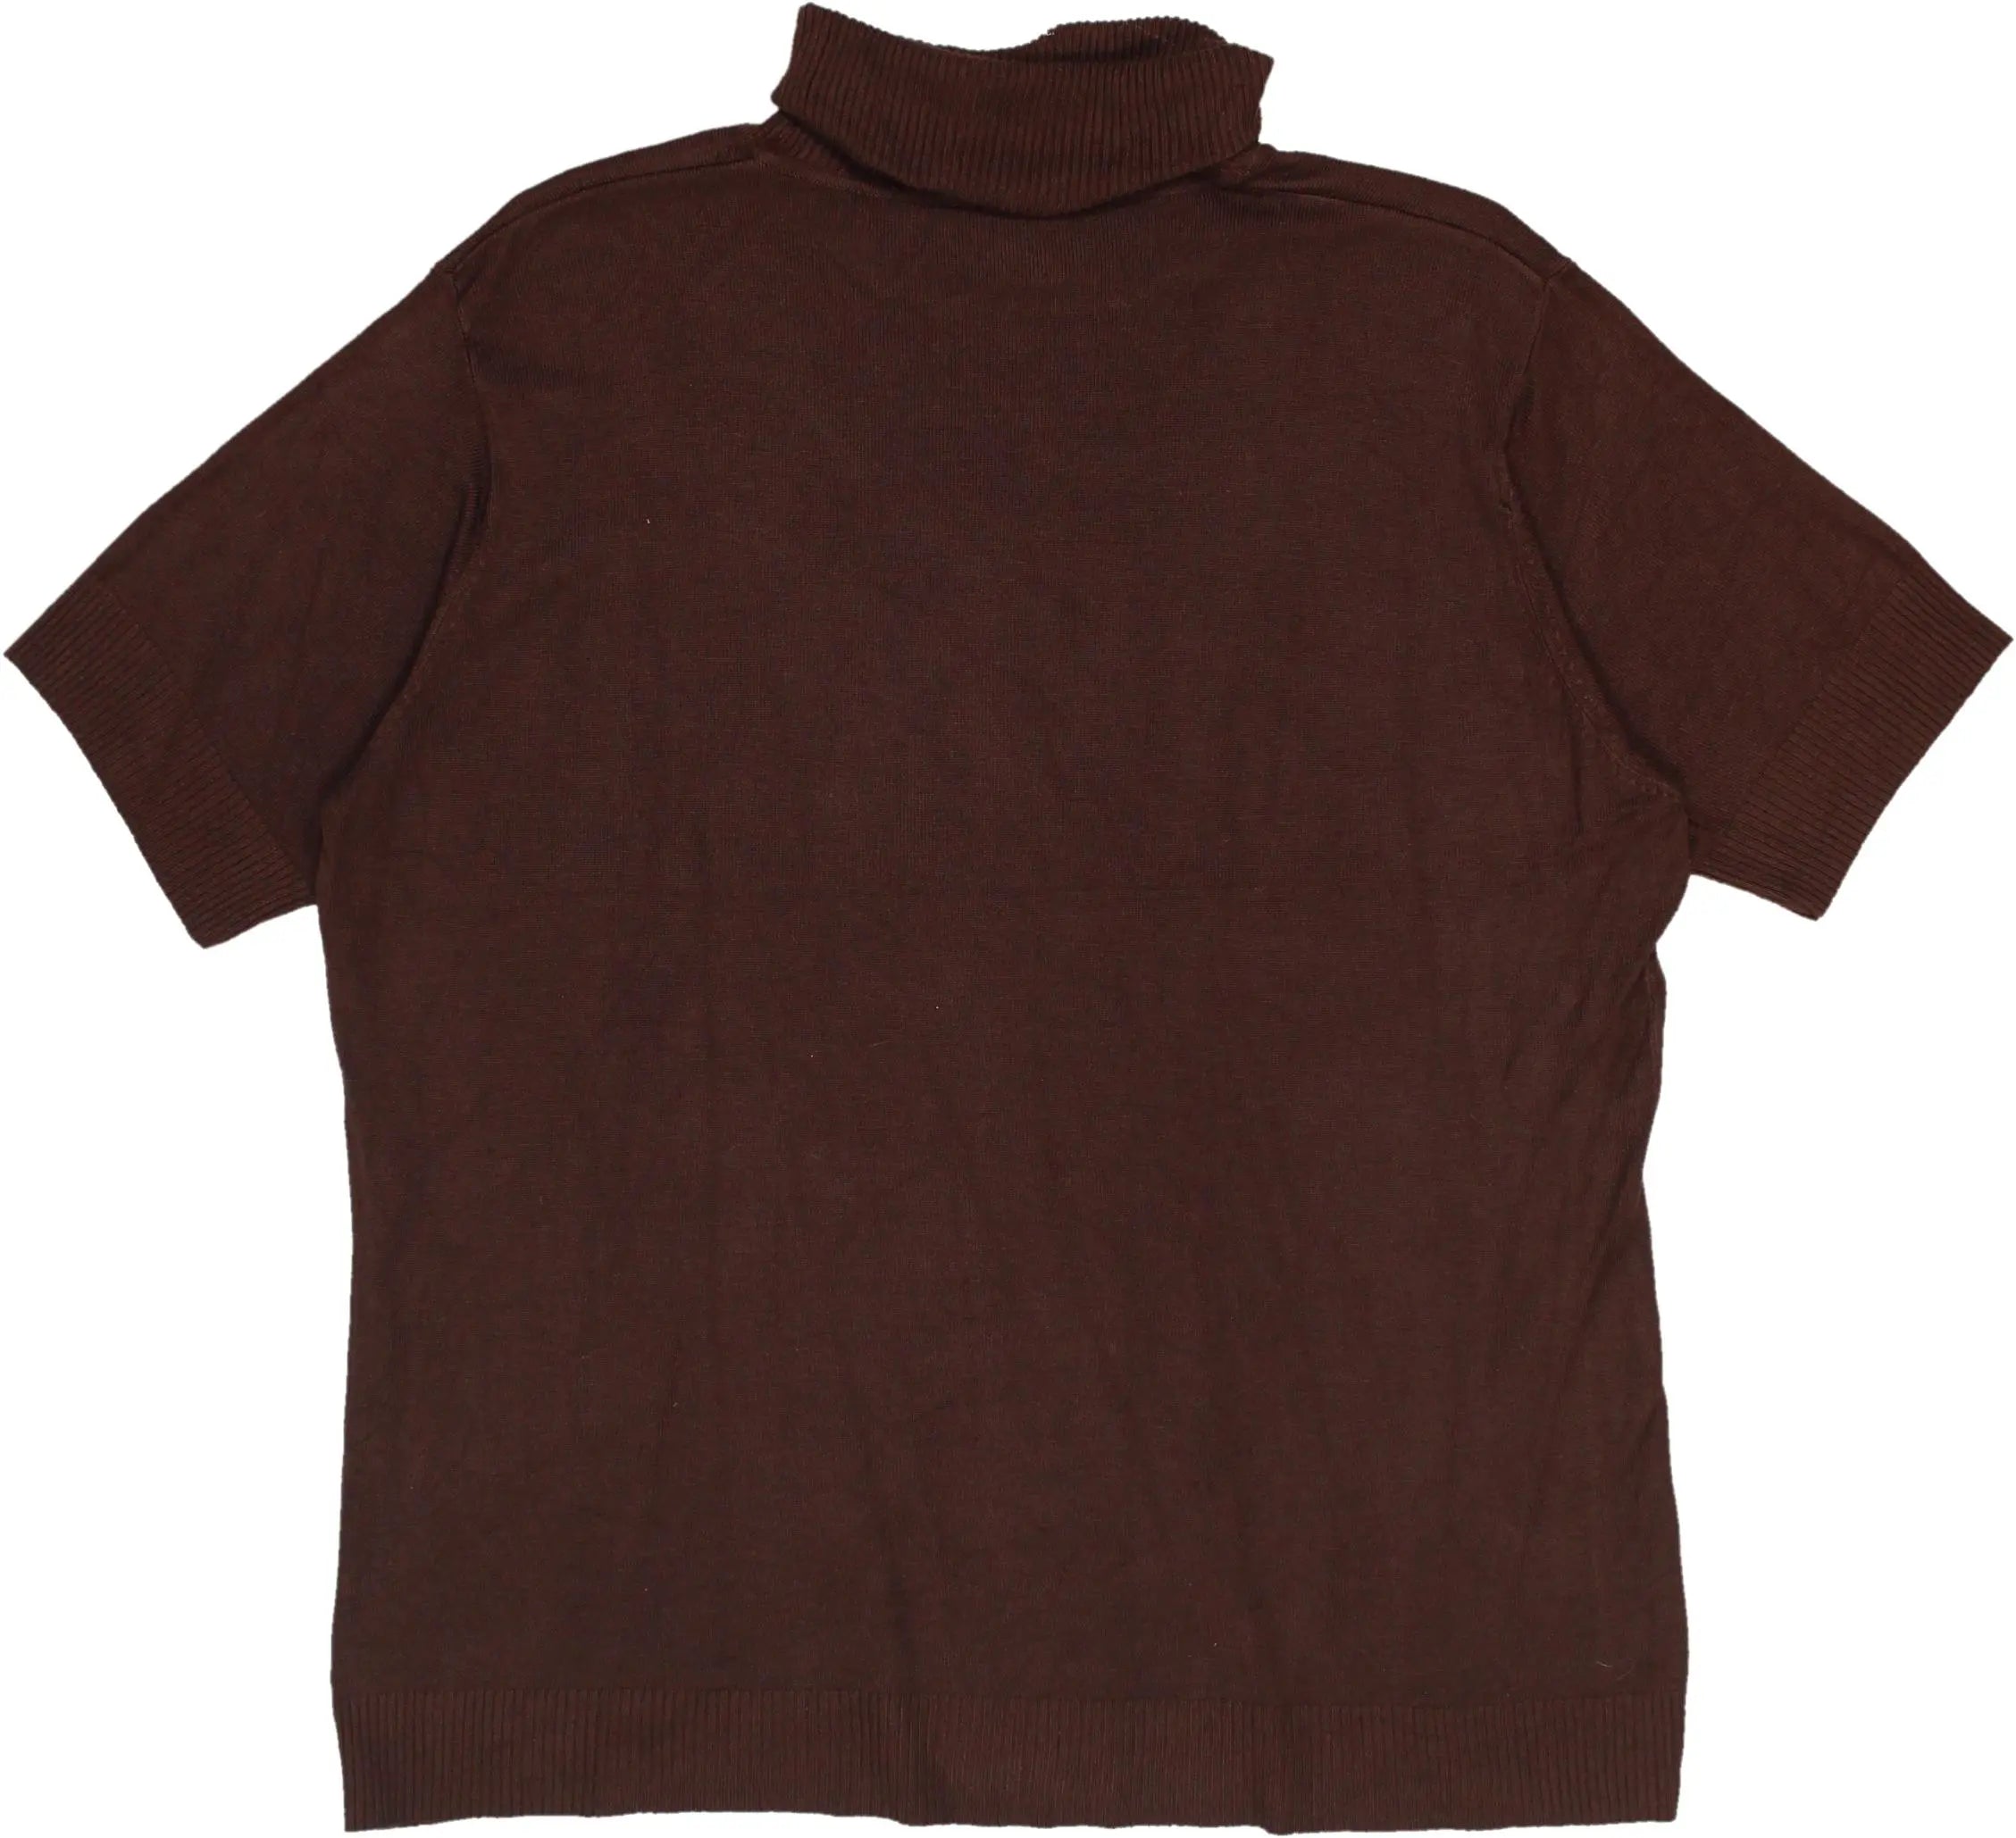 MS Mode - Brown Short Sleeve Turtleneck Jumper- ThriftTale.com - Vintage and second handclothing